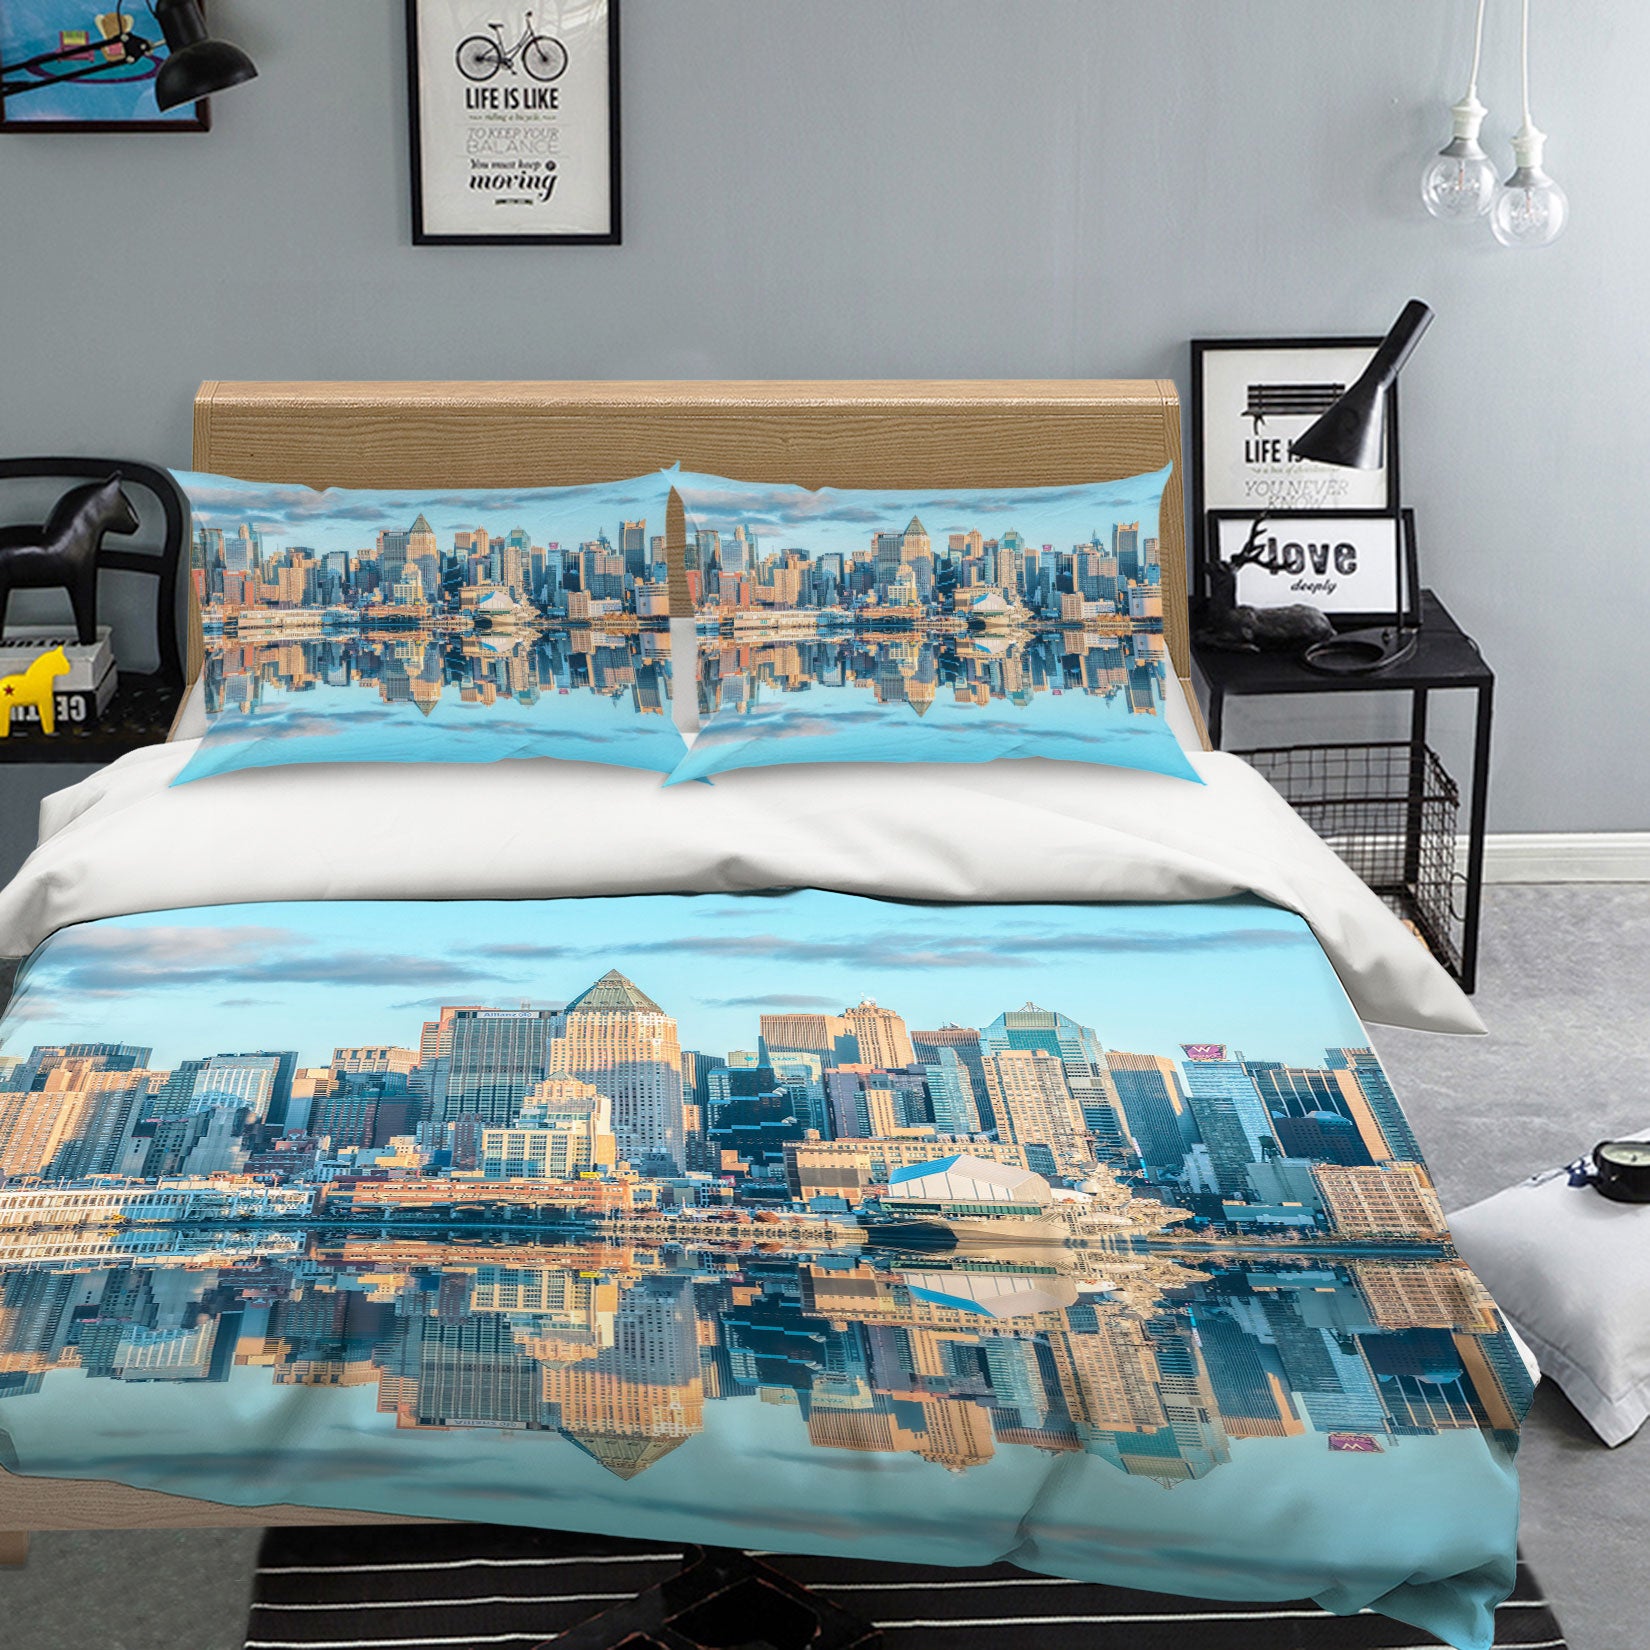 3D City River Reflection 1021 Assaf Frank Bedding Bed Pillowcases Quilt